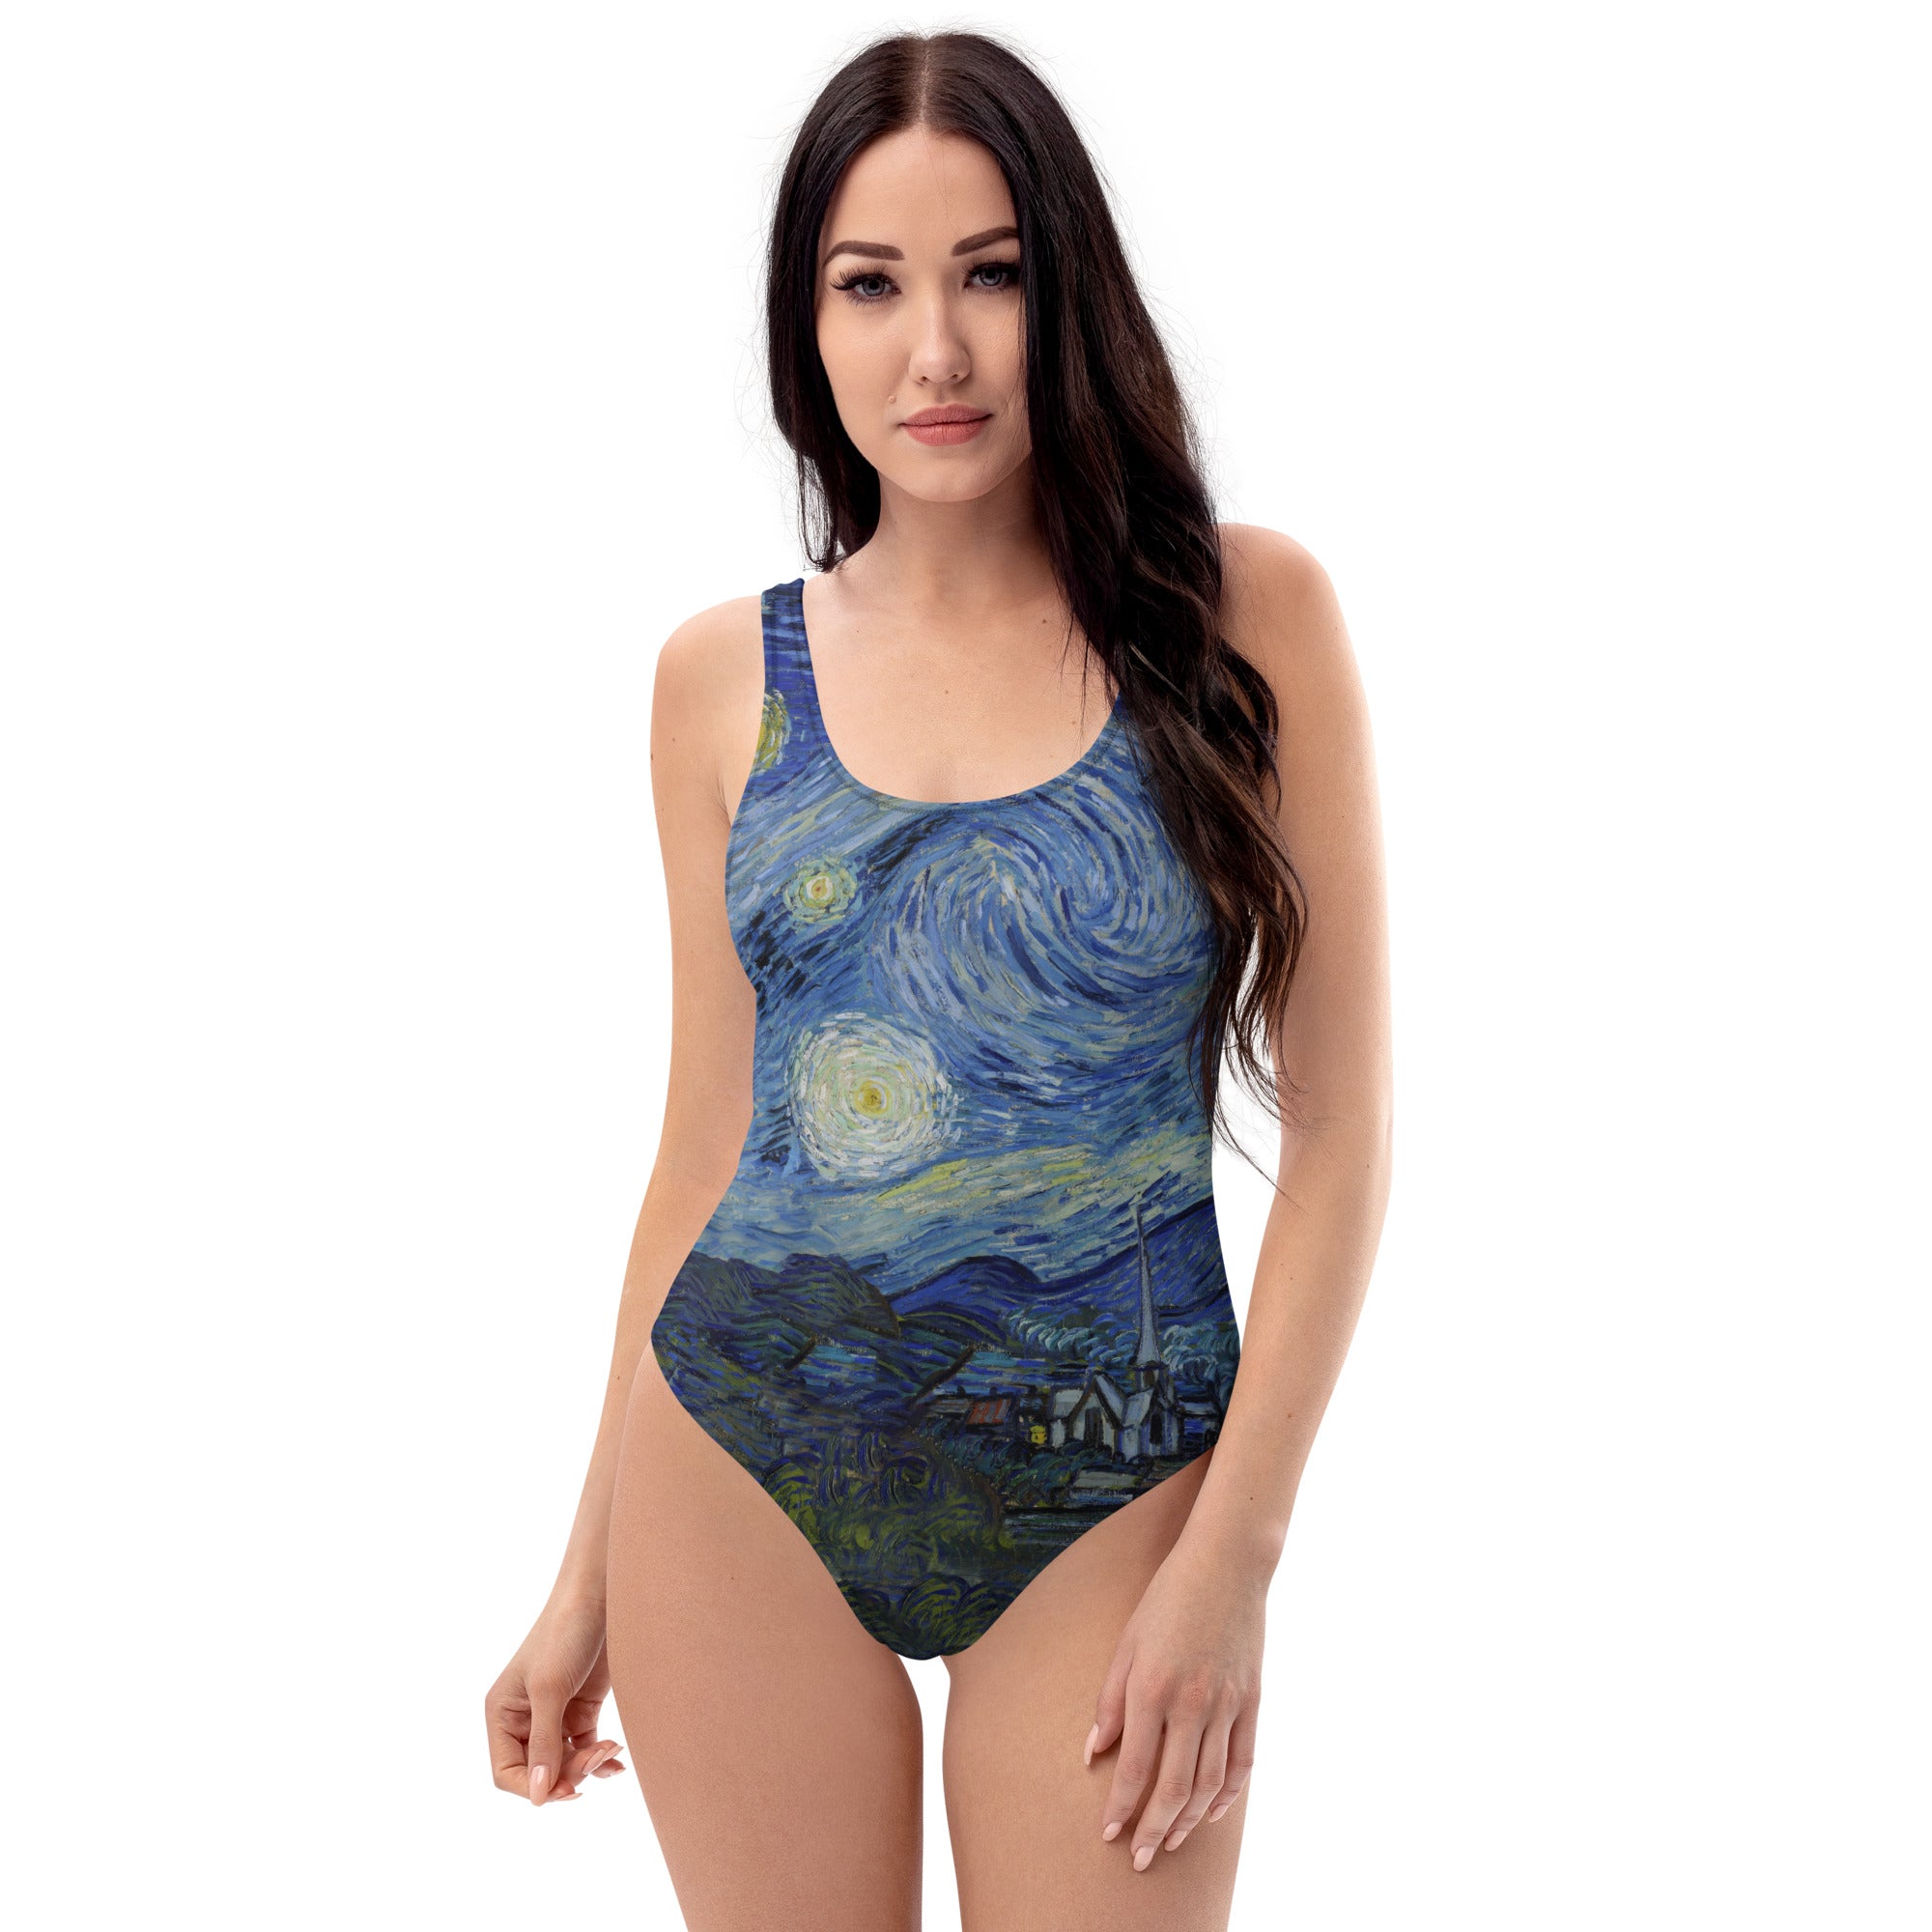 Vincent van Gogh 'Starry Night' Famous Painting Swimsuit | Premium Art One Piece Swimsuit